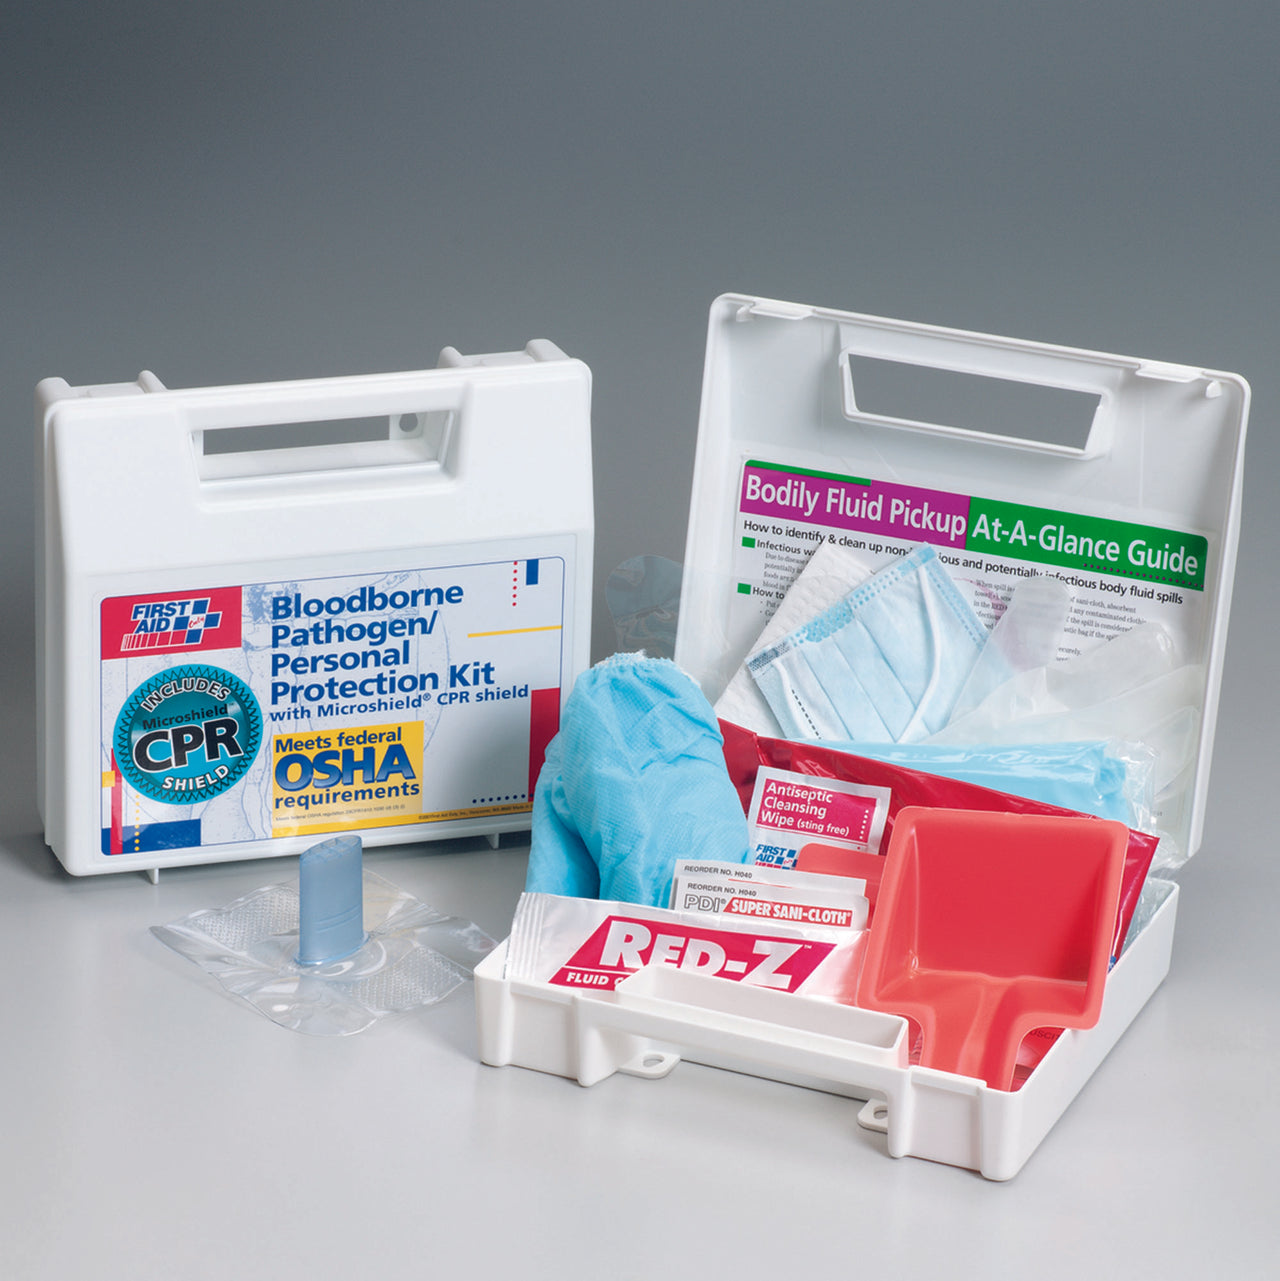 Bloodborne Pathogen/Personal Protection Kit w/ Microshield